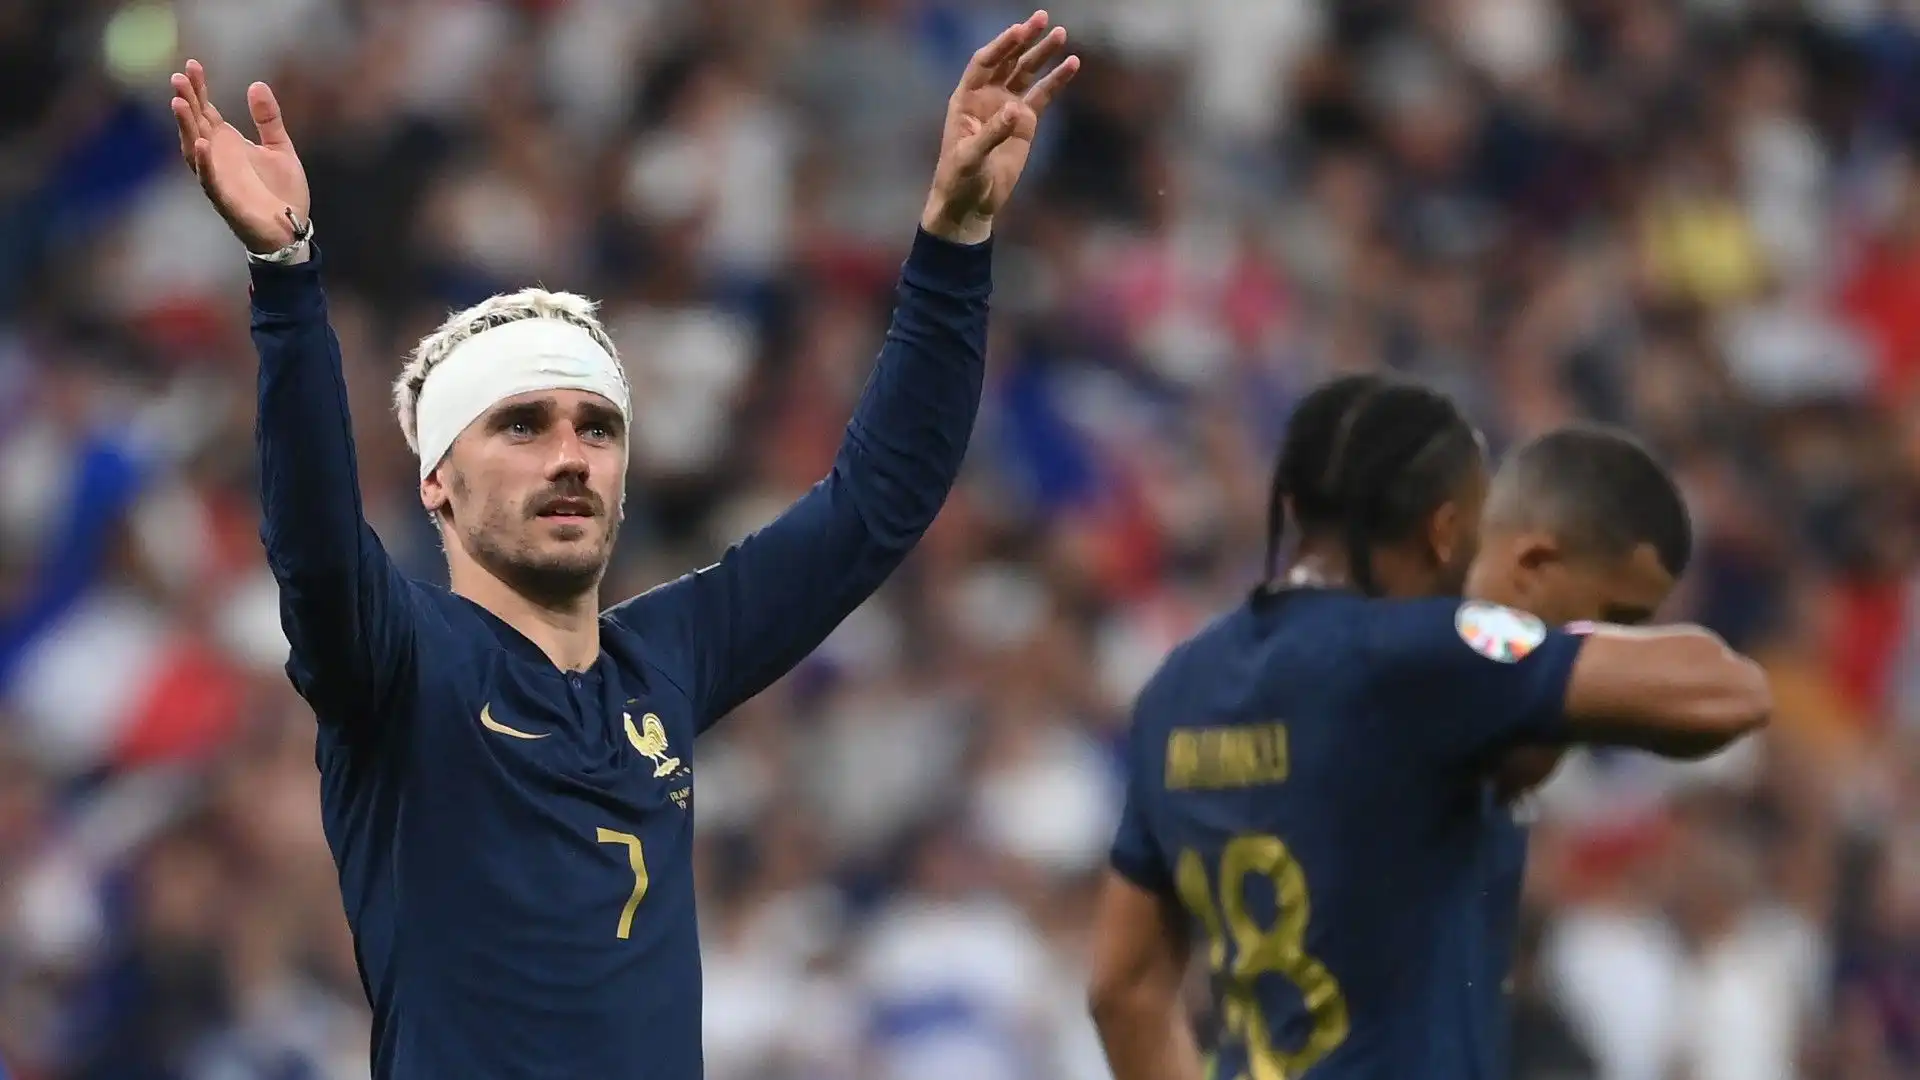 La Francia ha vinto 1-0